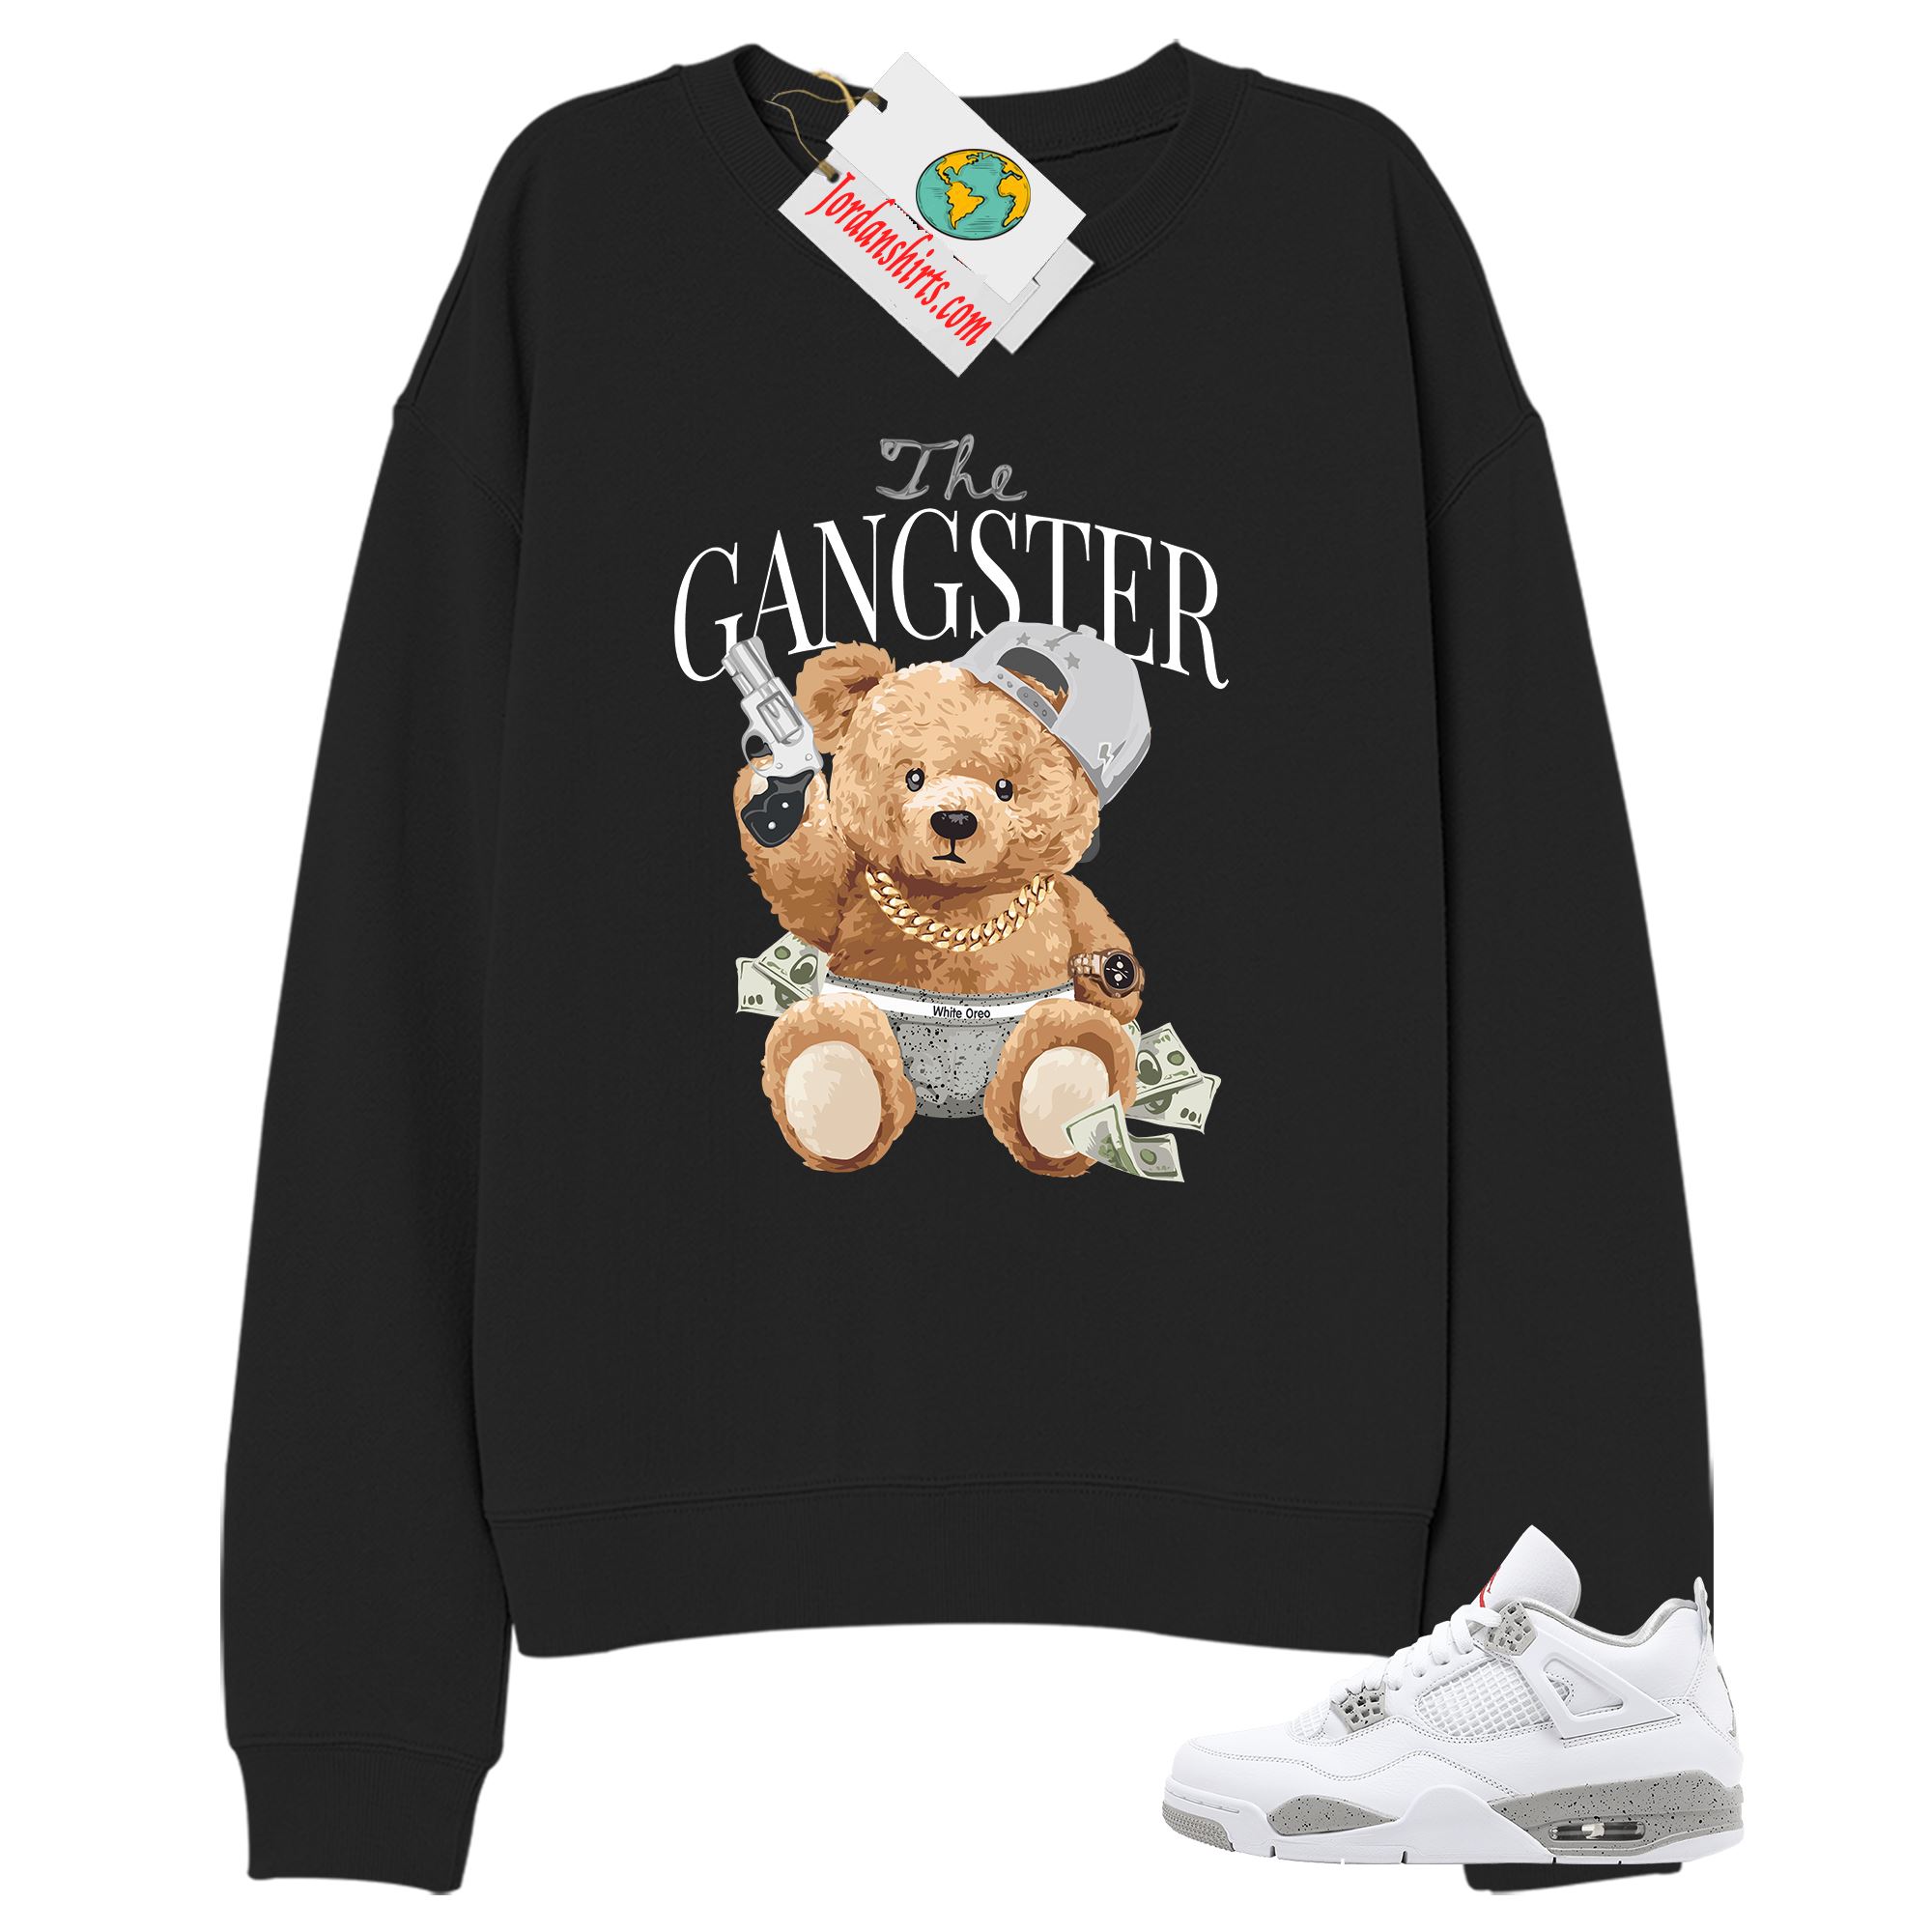 Jordan 4 Sweatshirt, Teddy Bear The Gangster Black Sweatshirt Air Jordan 4 White Oreo 4s-trungten-jkgbl Plus Size Up To 5xl